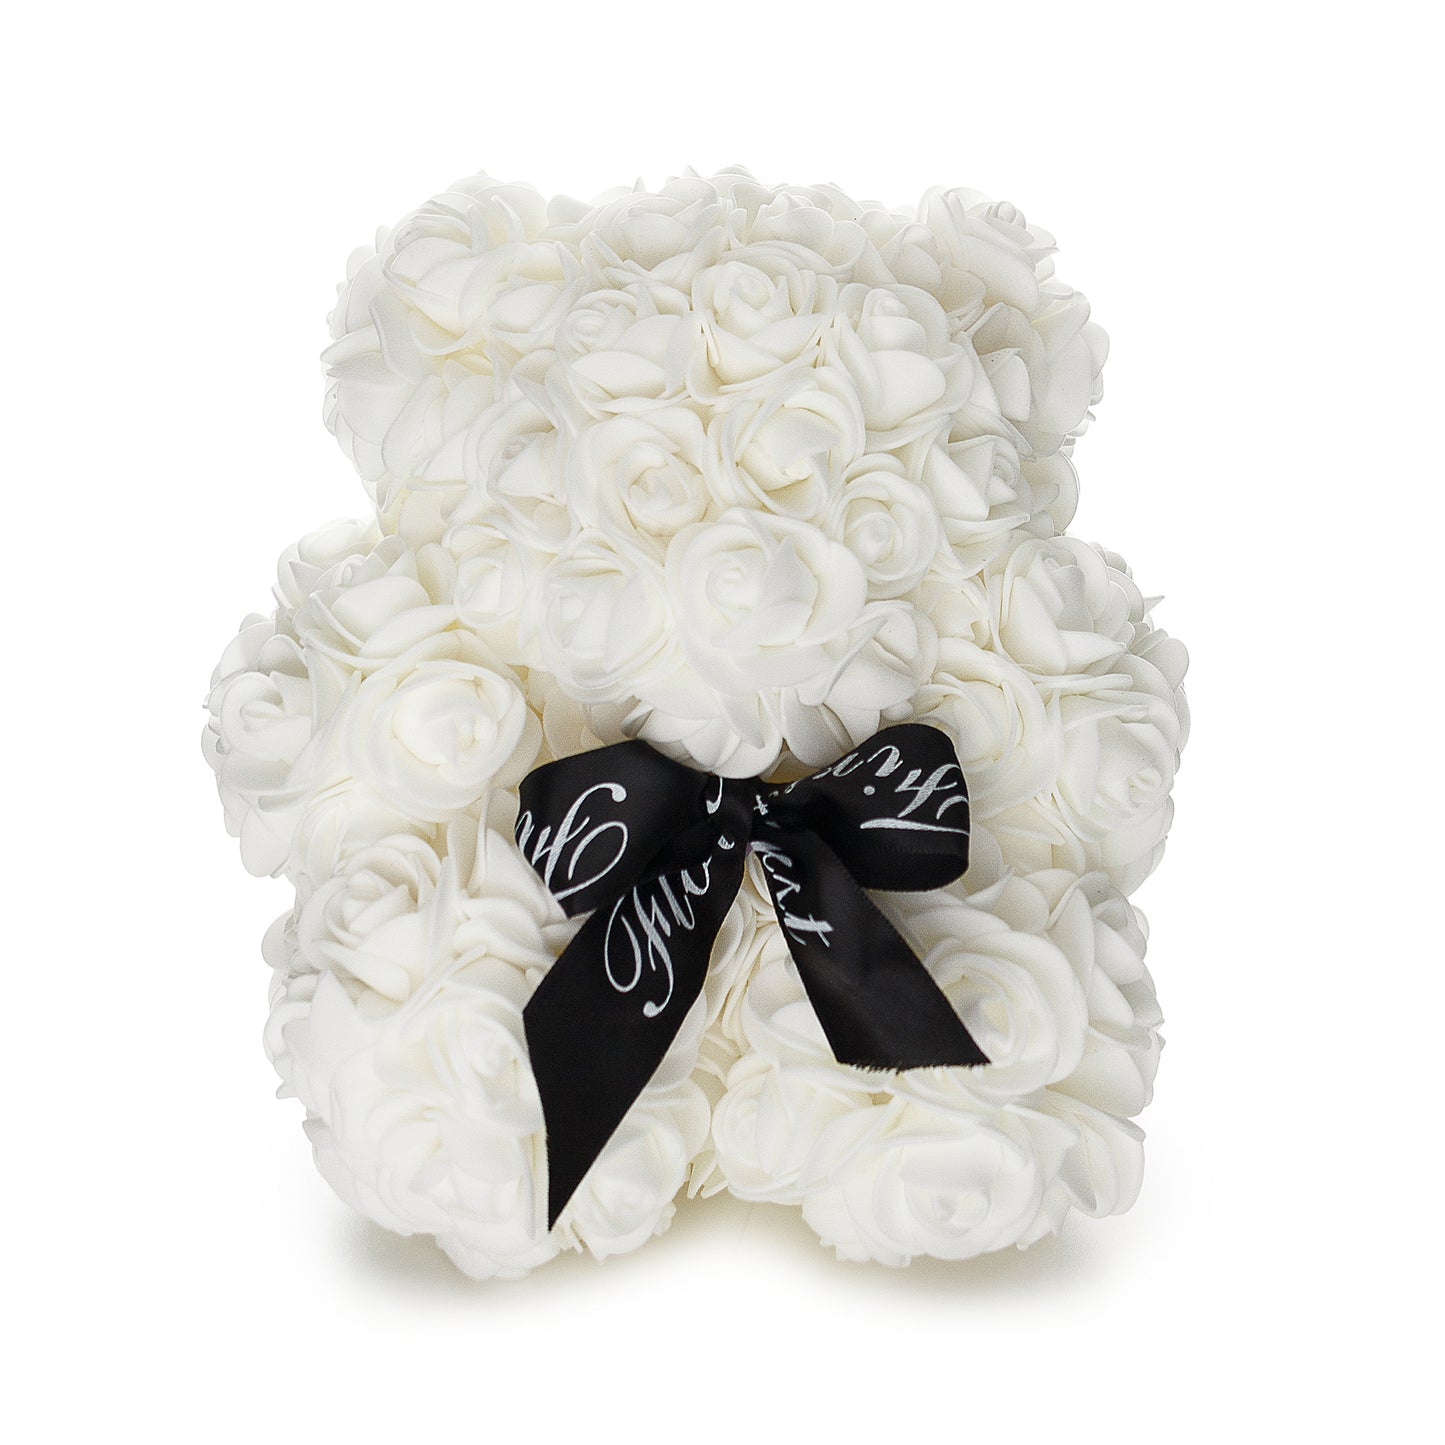 White Luxury Handmade Rose Teddy Bear